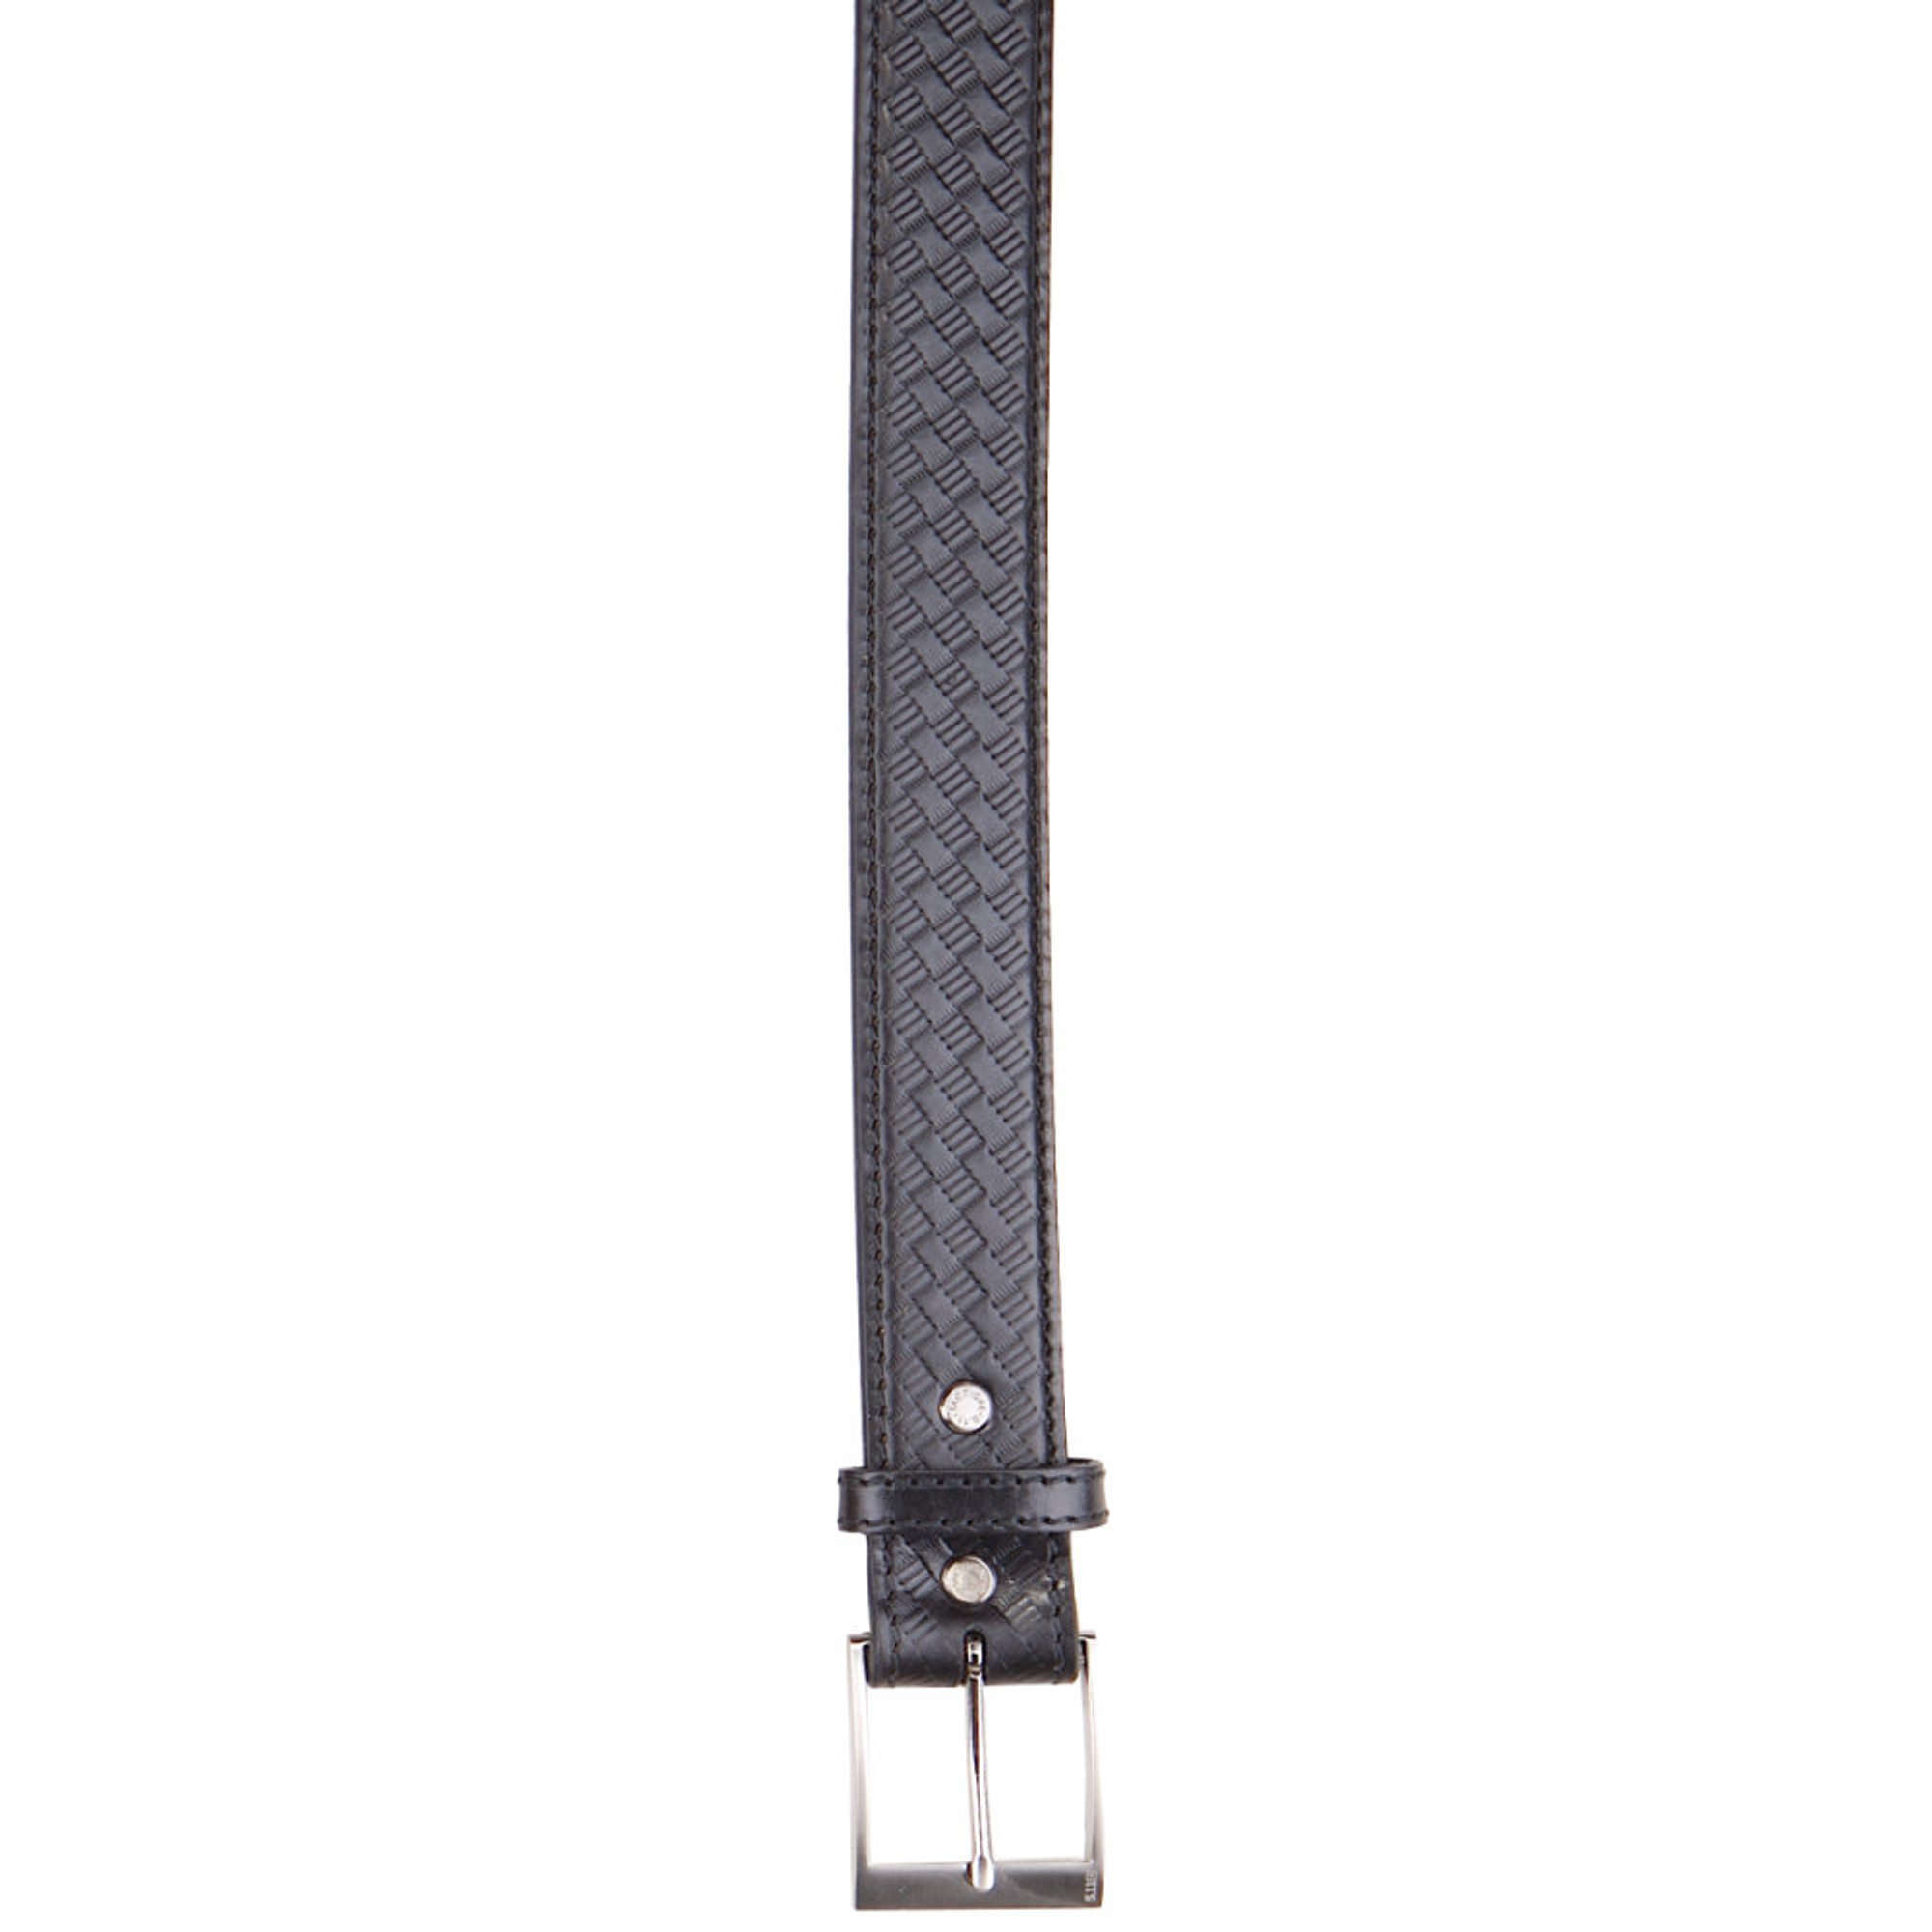 5.11 Leather Basketweave Belt - 1.75" Wide